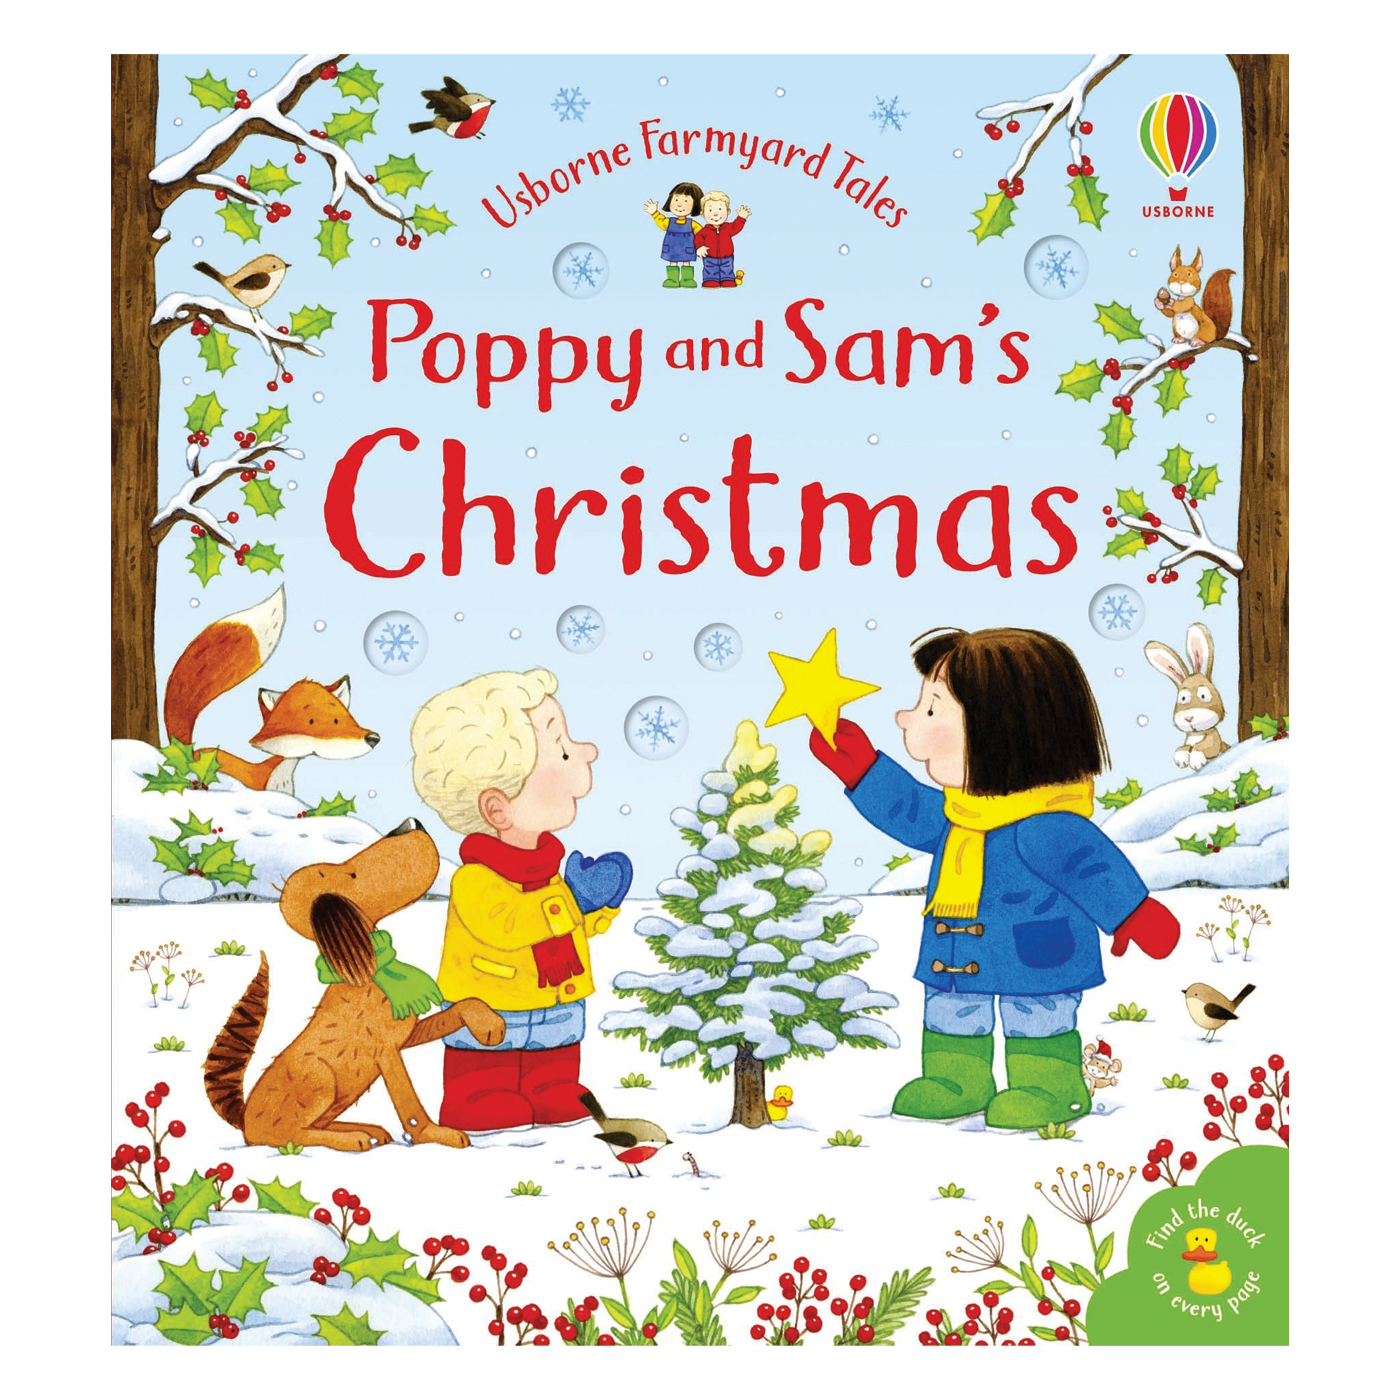  Poppy and Sam's Christmas